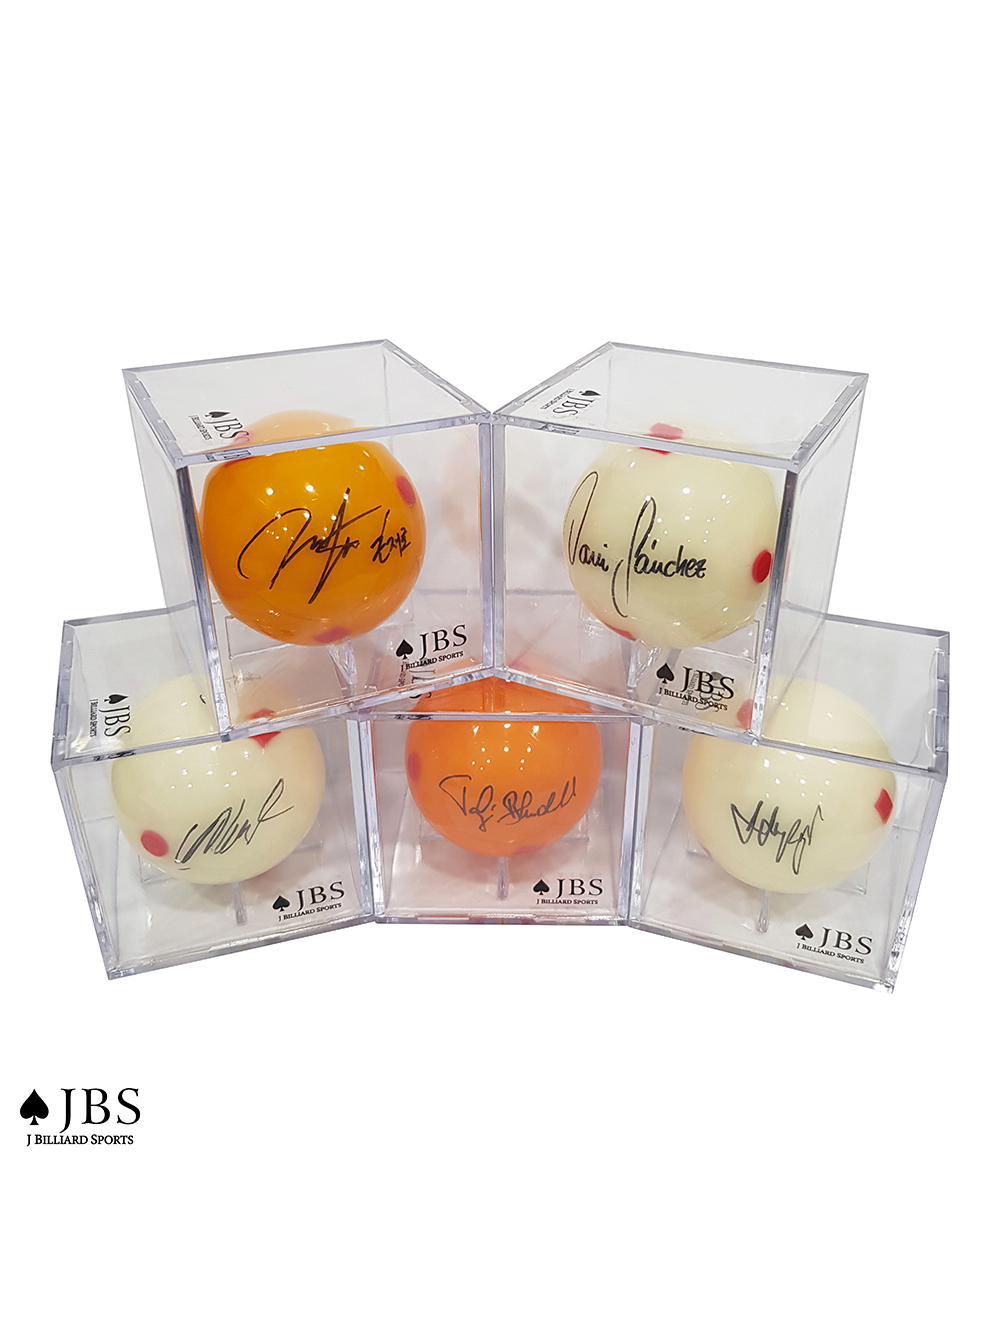 ♠JBS Signature Ball&Case